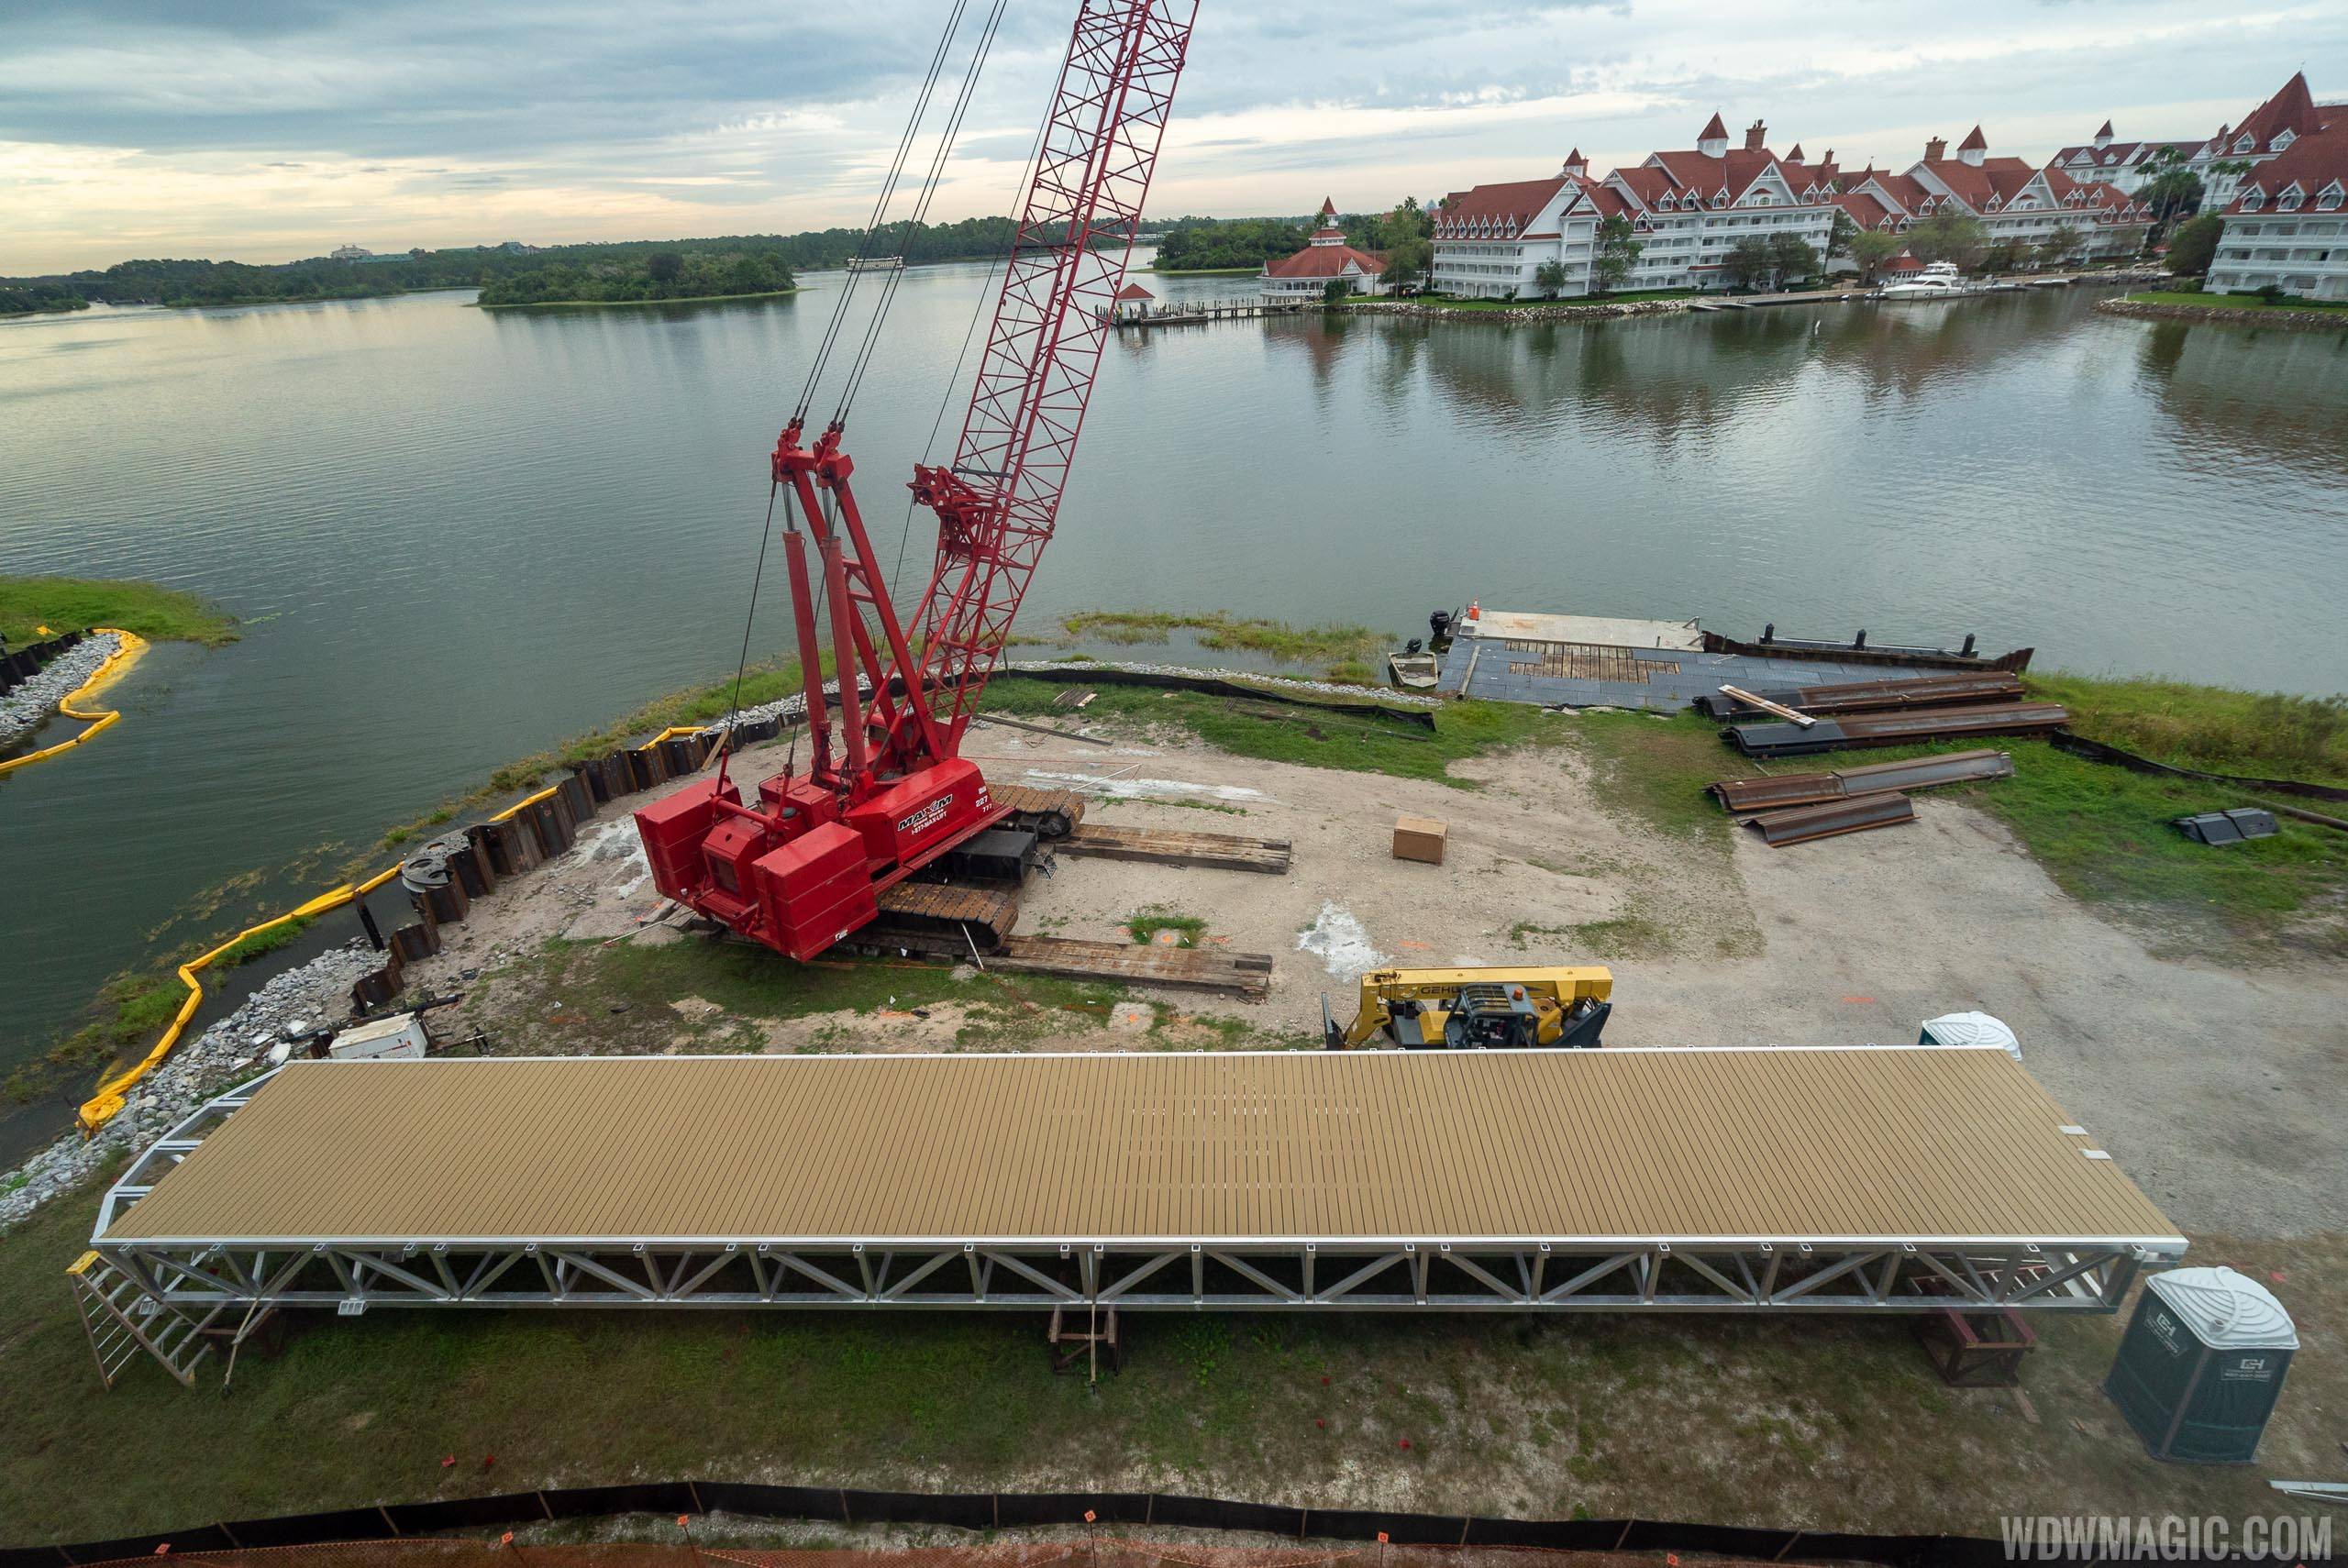 PHOTOS - Latest look at the Grand Floridian to Magic Kingdom bridge construction